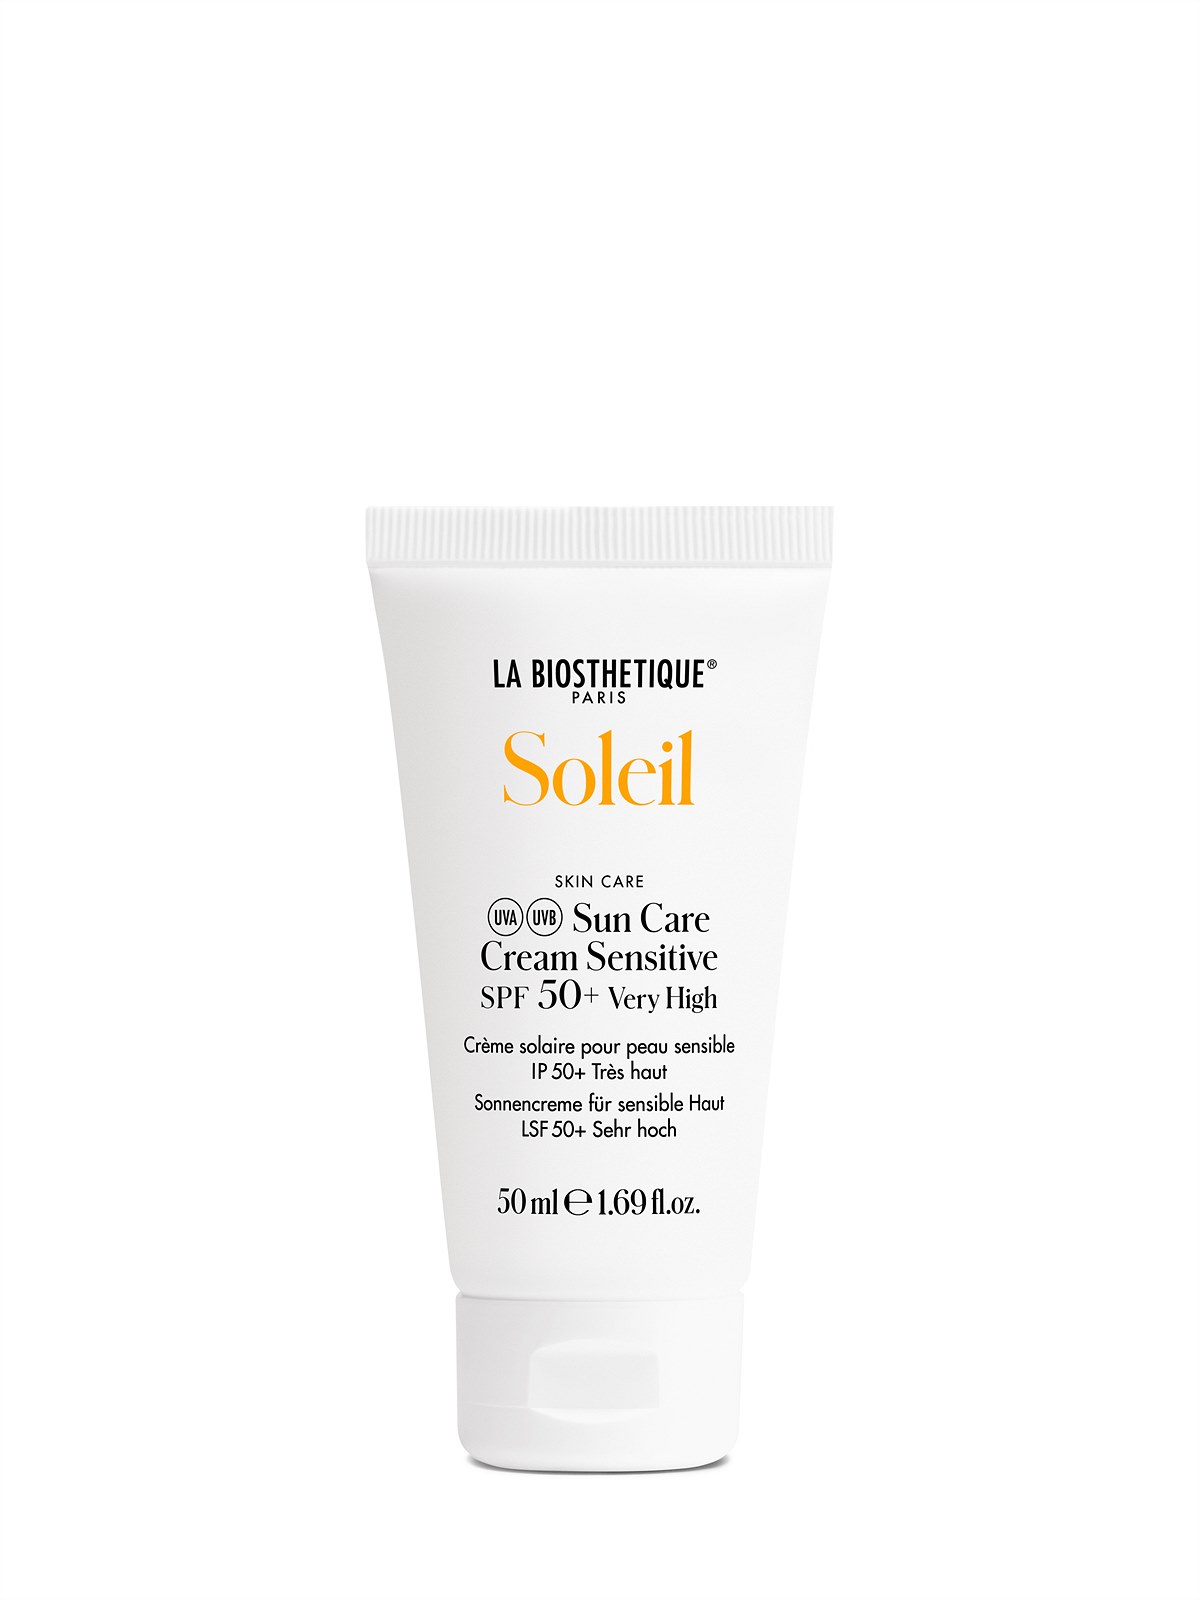 La Biosthétique_Skin-Soleil-Sun-Care-Cream-Sensitive-SPF50-50ml_EUR 24,50